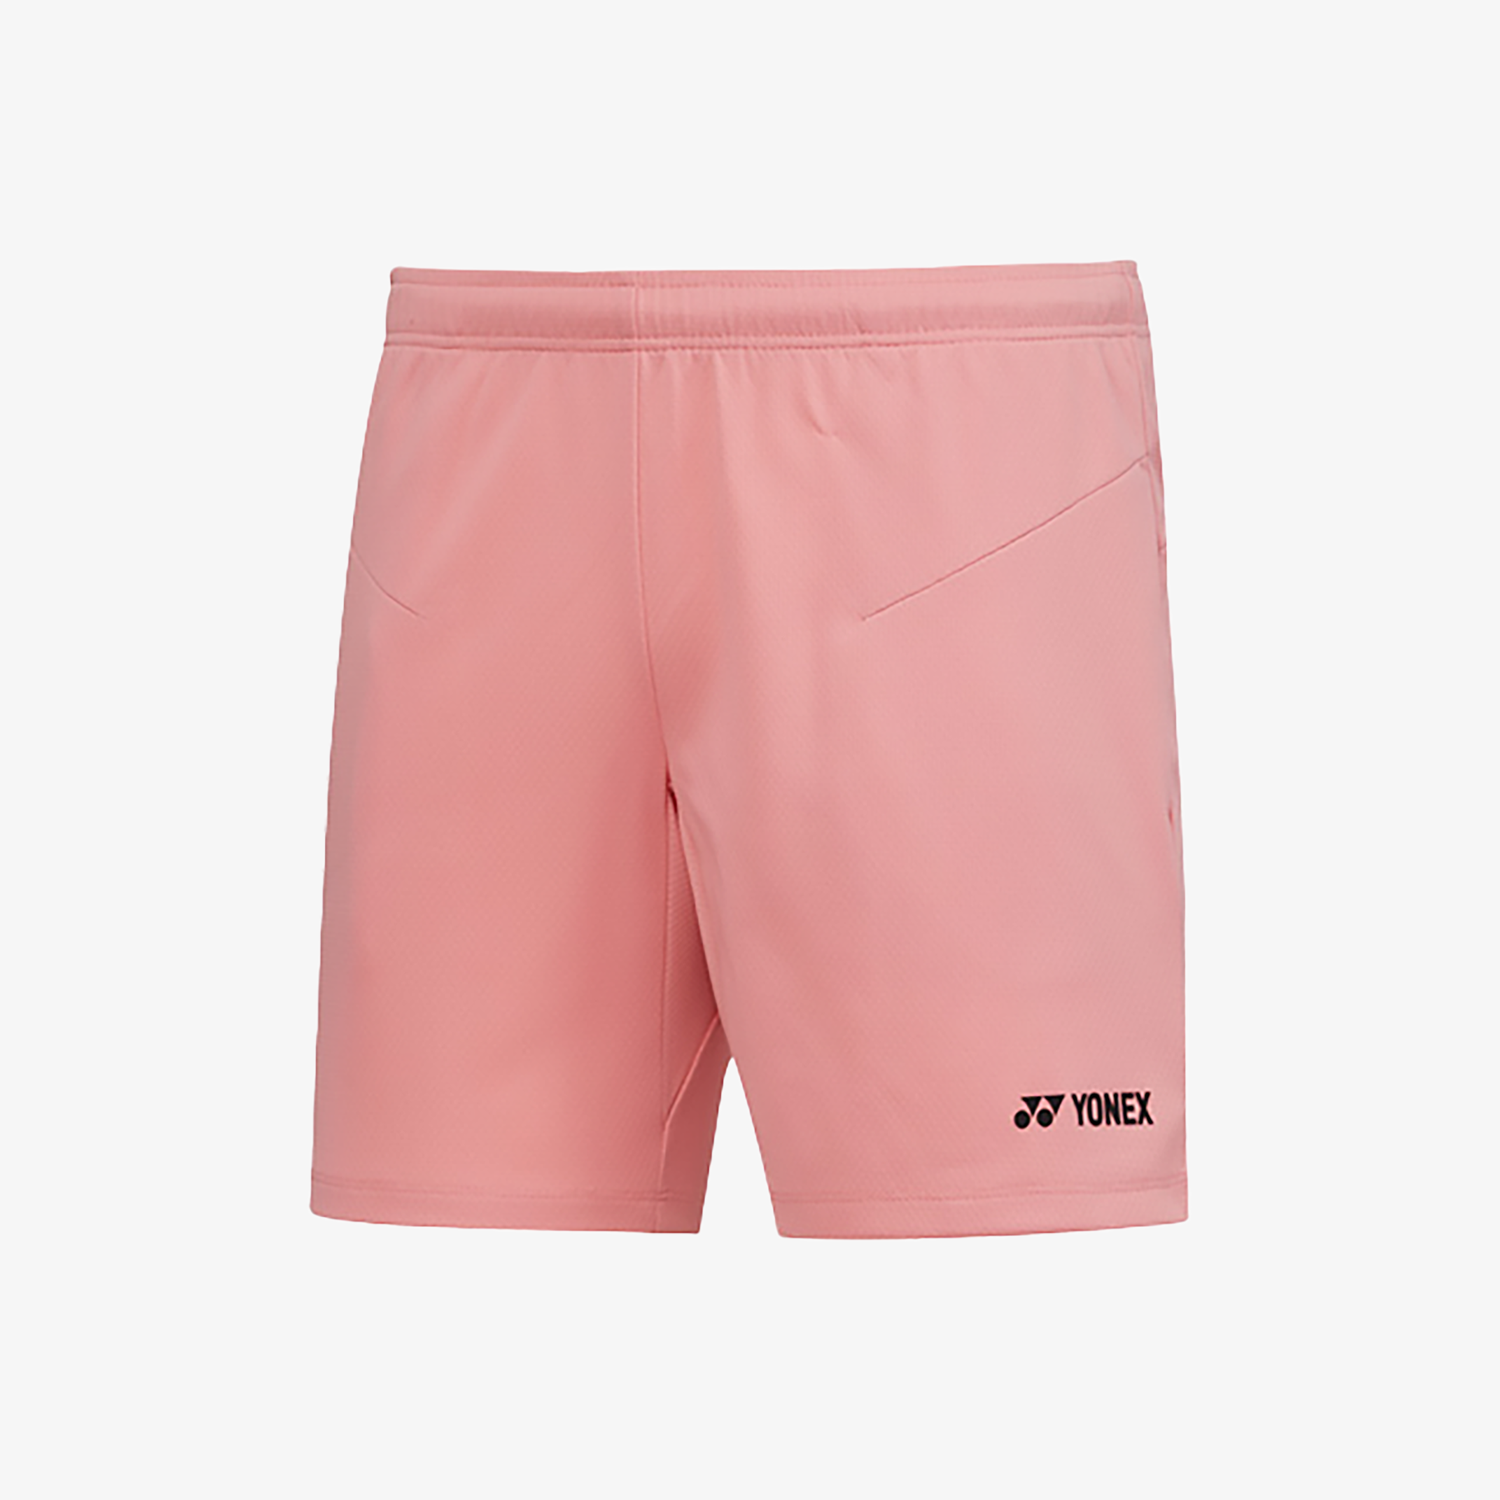 Yonex Women's Shorts 231PH002F (Pink)